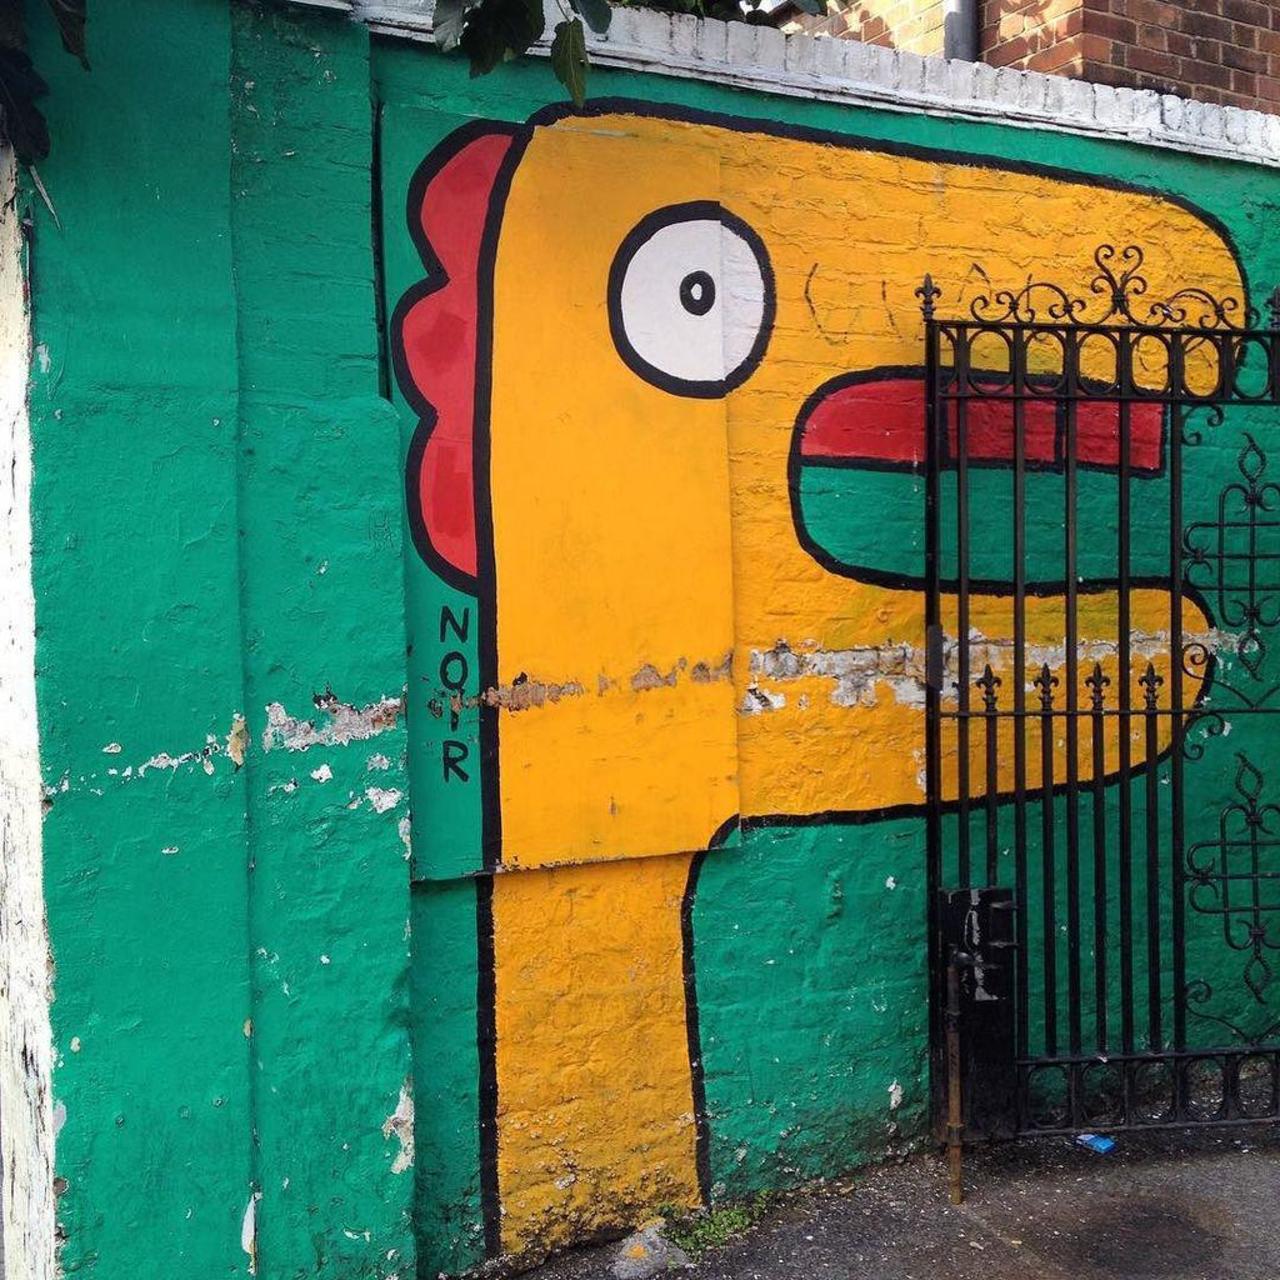 StArtEverywhere: Waaaa! #streetart #streetartlondon #graffiti #london #thisislondon by isadarko http://t.co/UKwwbEb8b3